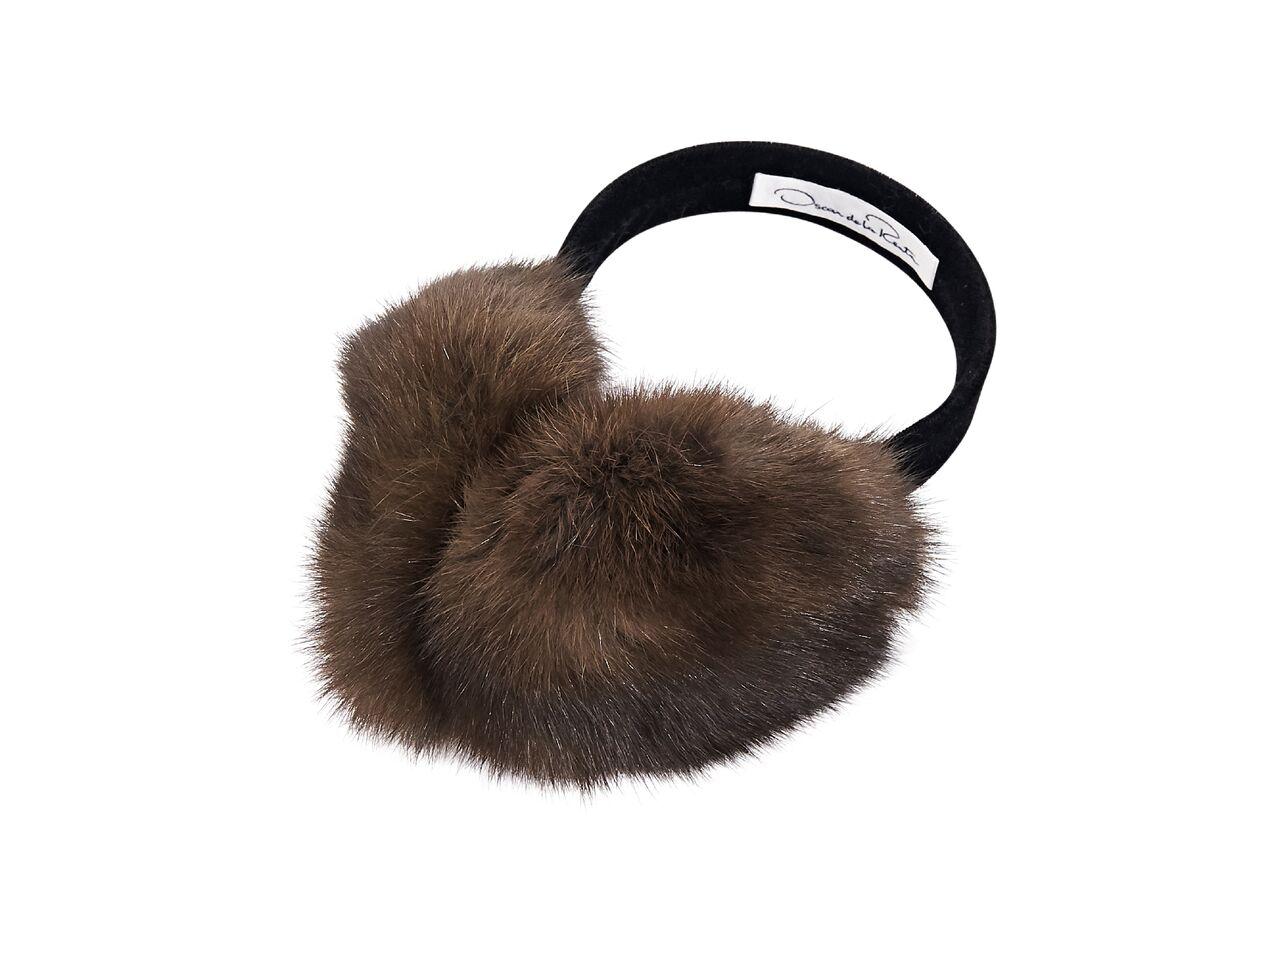 Product details:  Brown sable fur ear muffs by Oscar de la Renta.  Black headband.  11